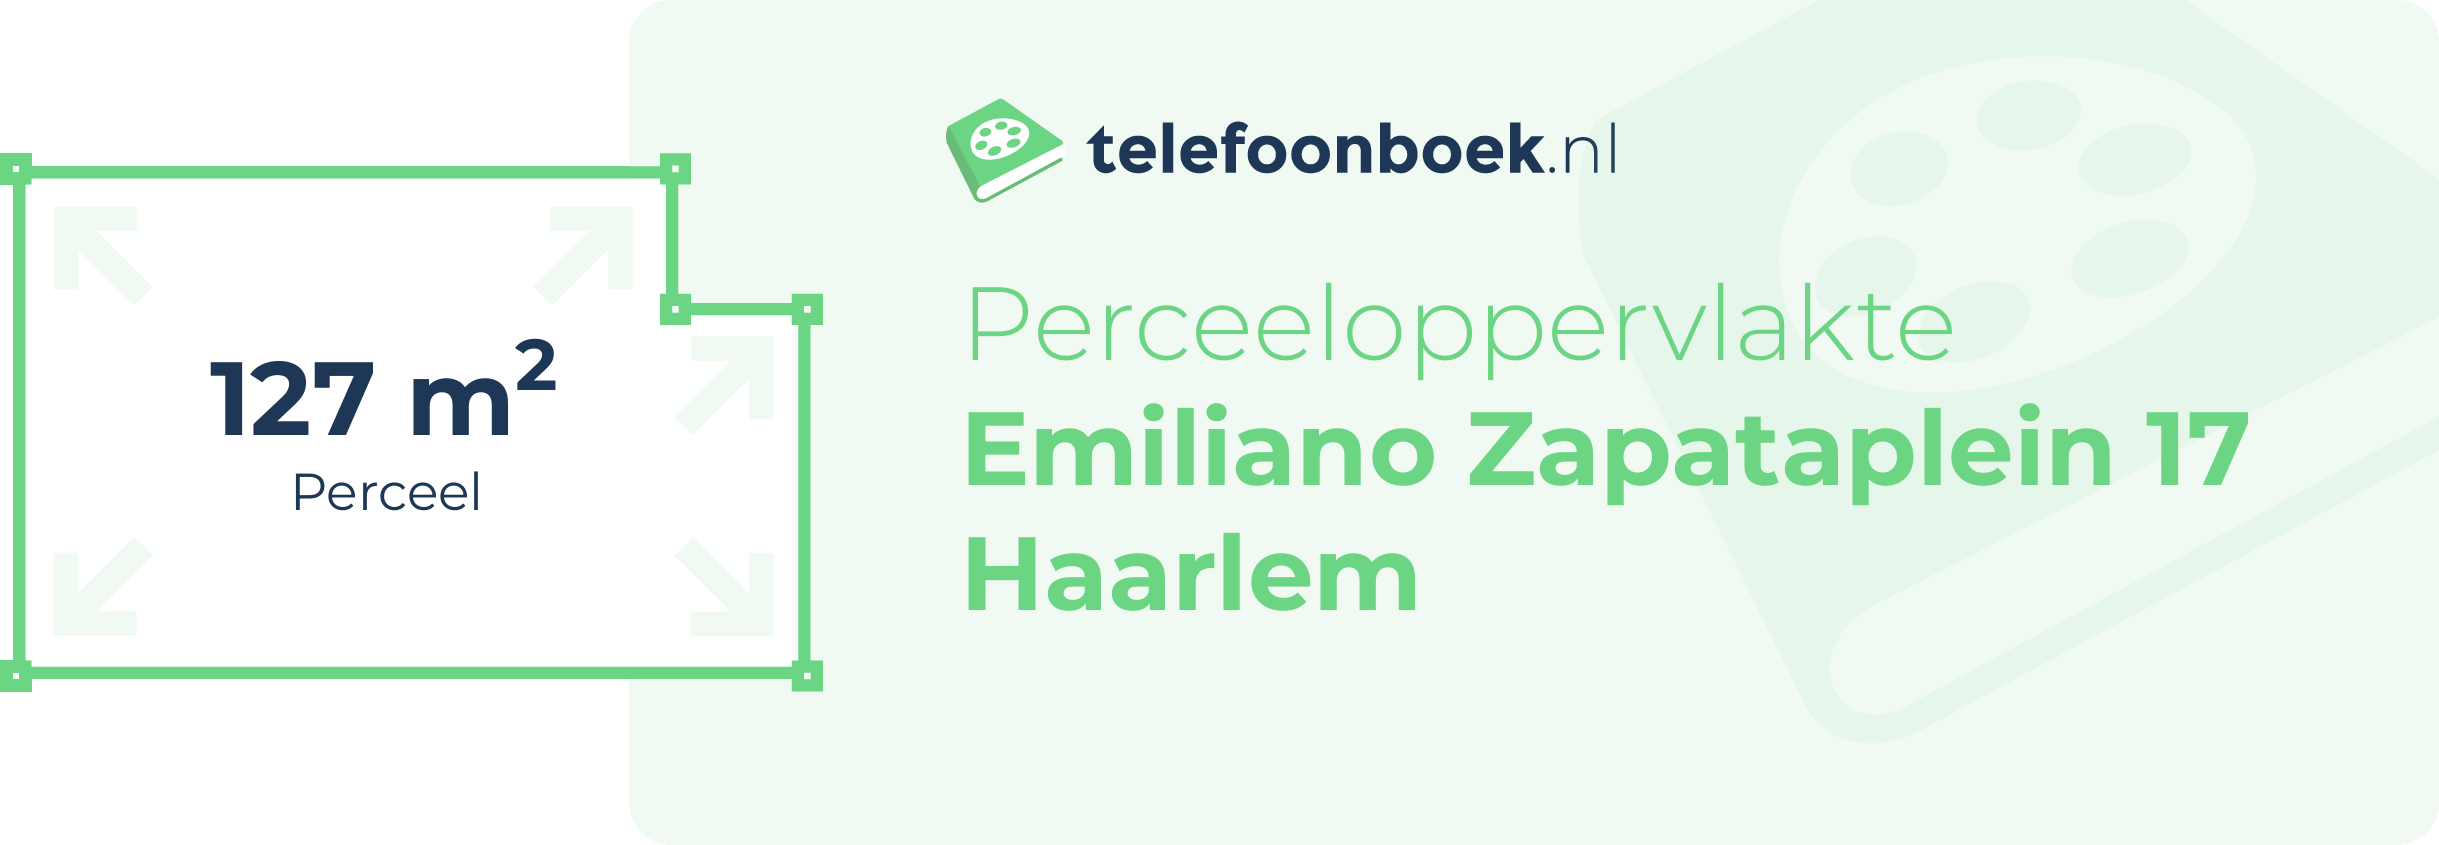 Perceeloppervlakte Emiliano Zapataplein 17 Haarlem